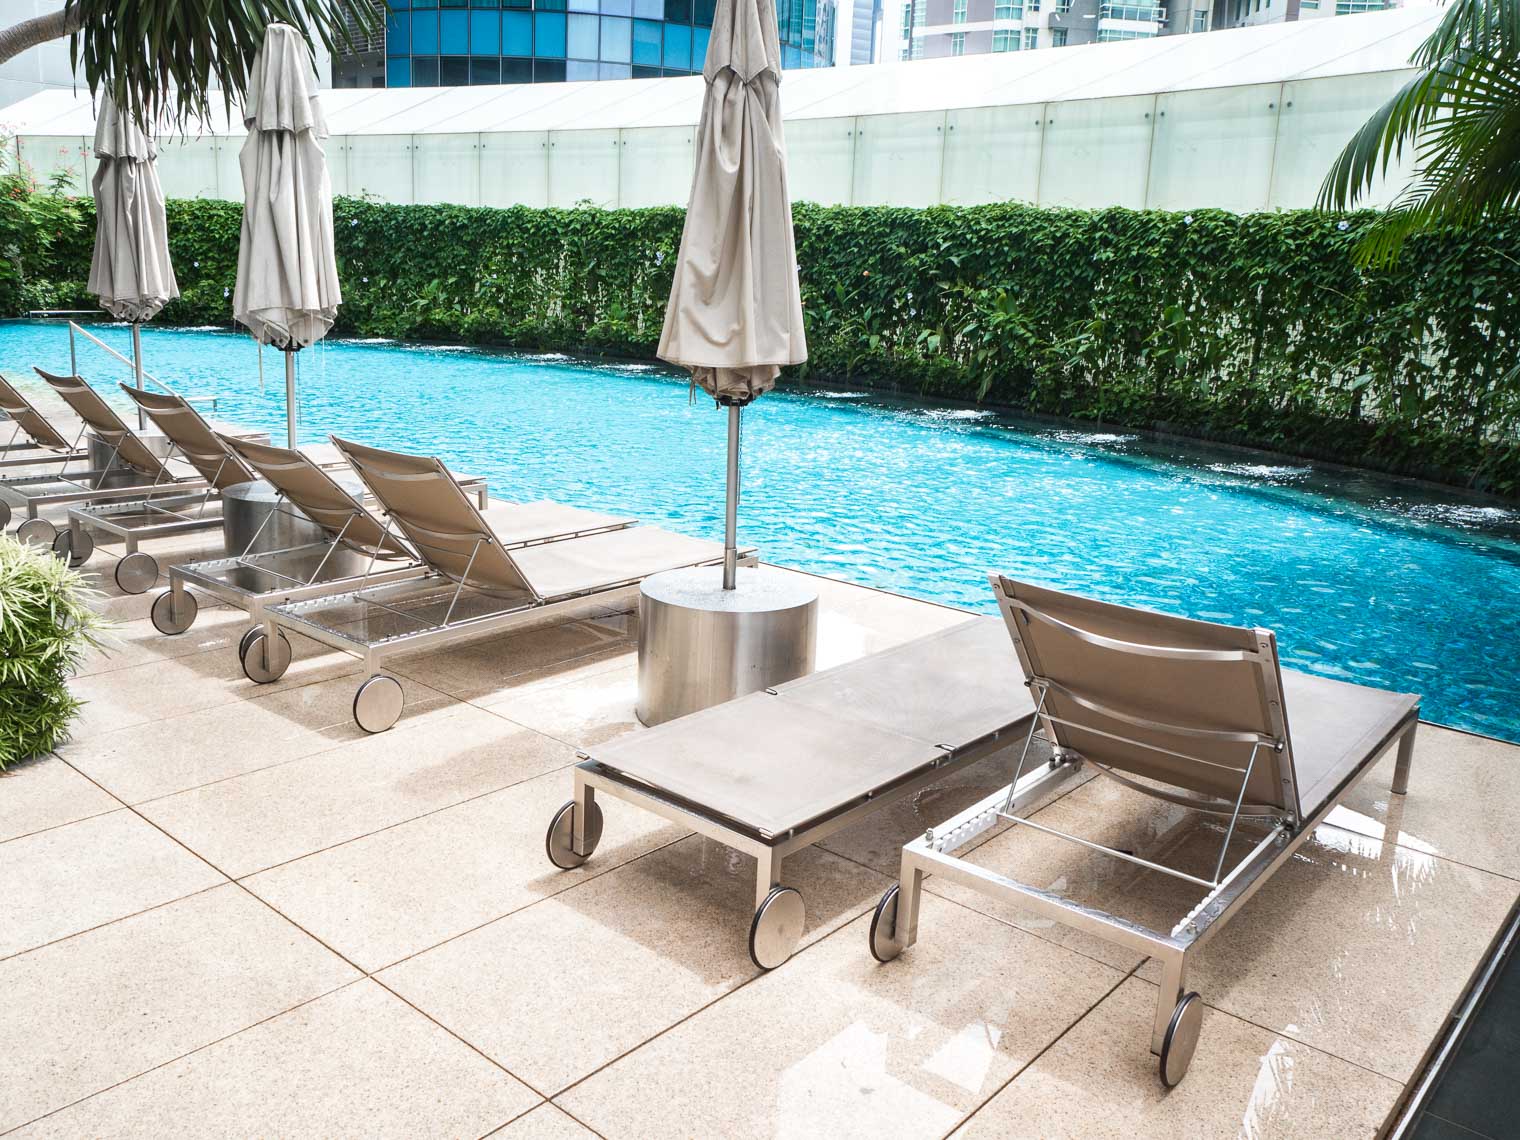 Swimming pool at St Regis hotel Singapore